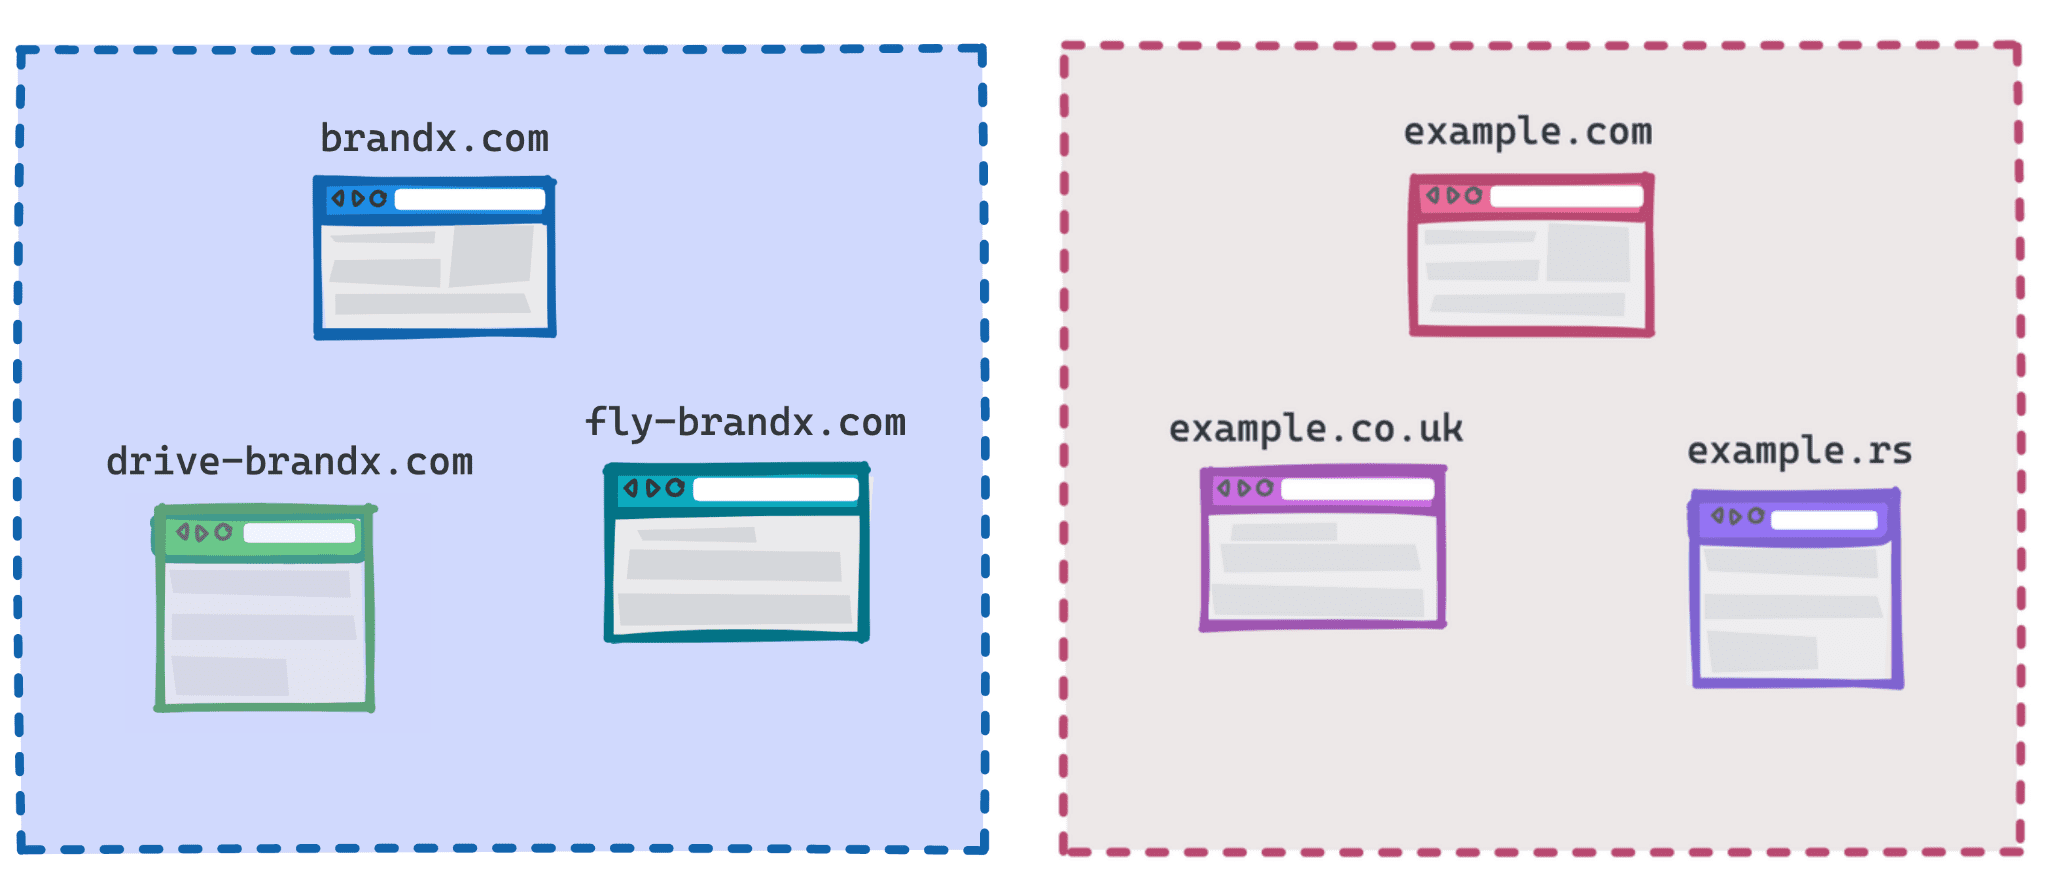 Diagramma che mostra brandx.com, fly-brandx.com e drive-brandx.com come un gruppo ed example.com, example.rs, example.co.uk come altro gruppo.